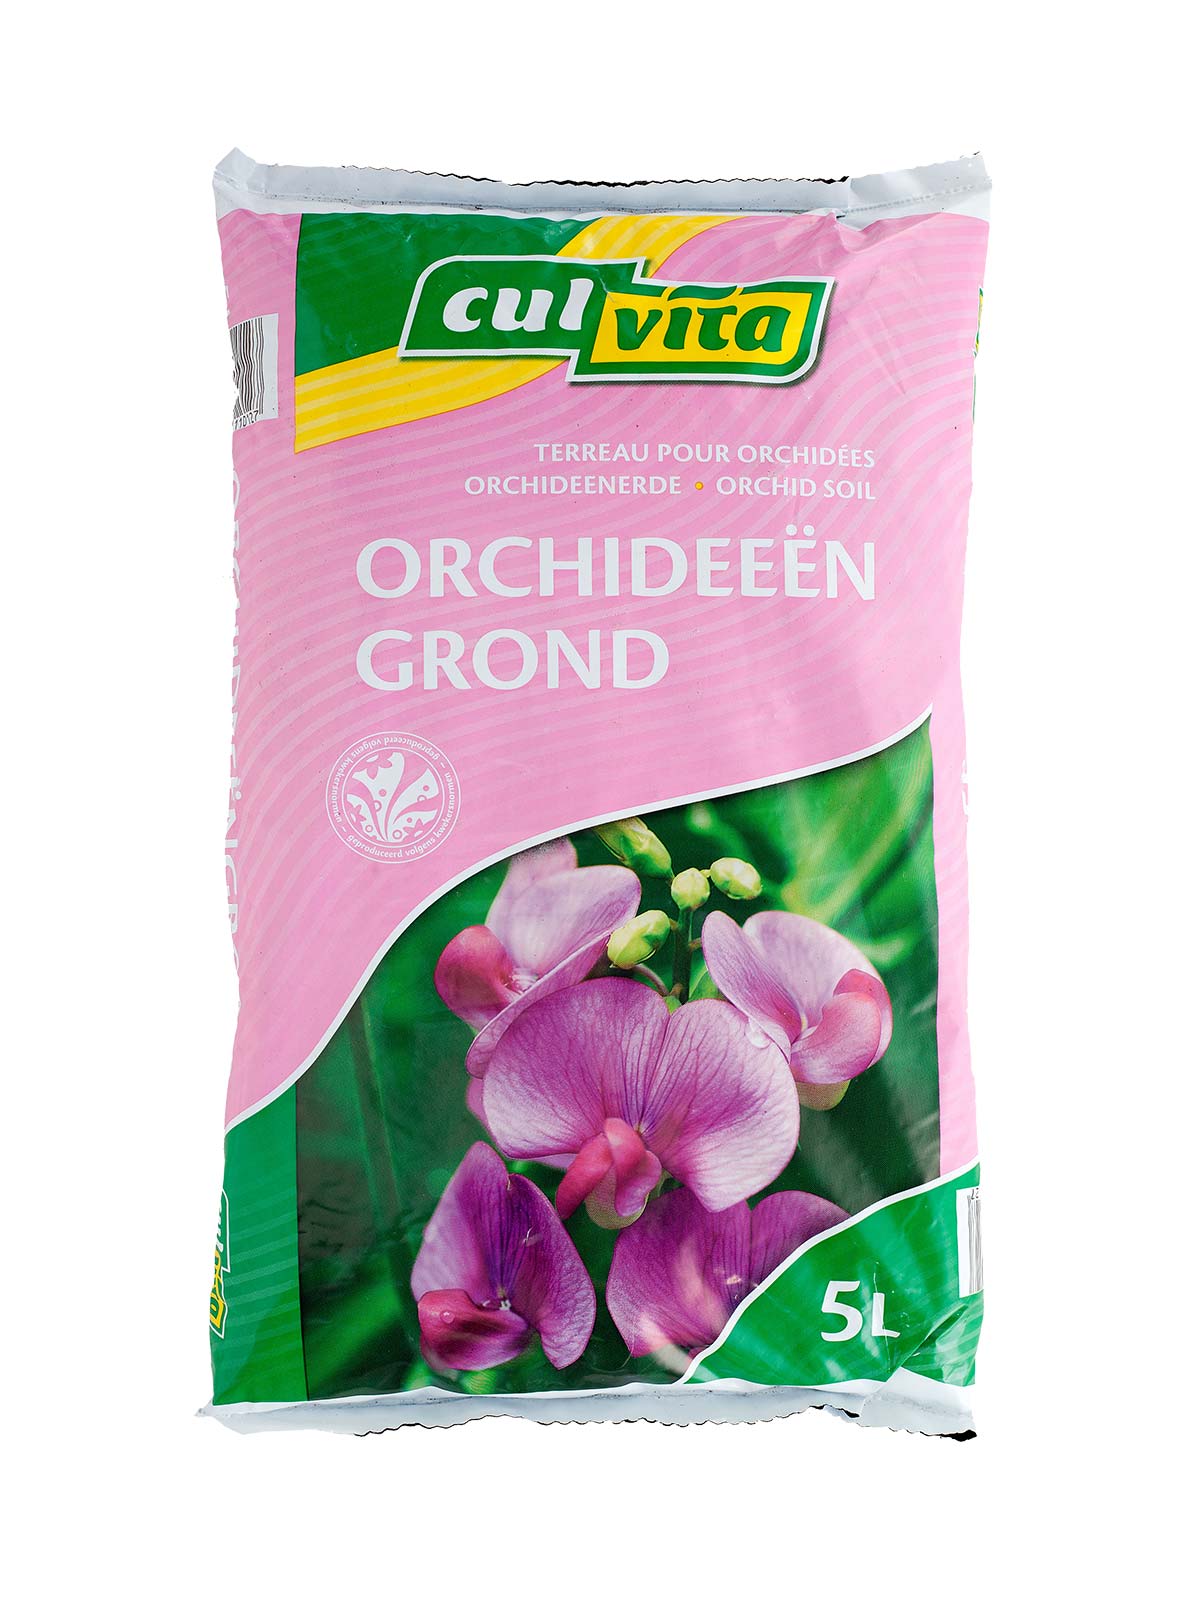 Culvita Orchideeengrond | Culvita.nl